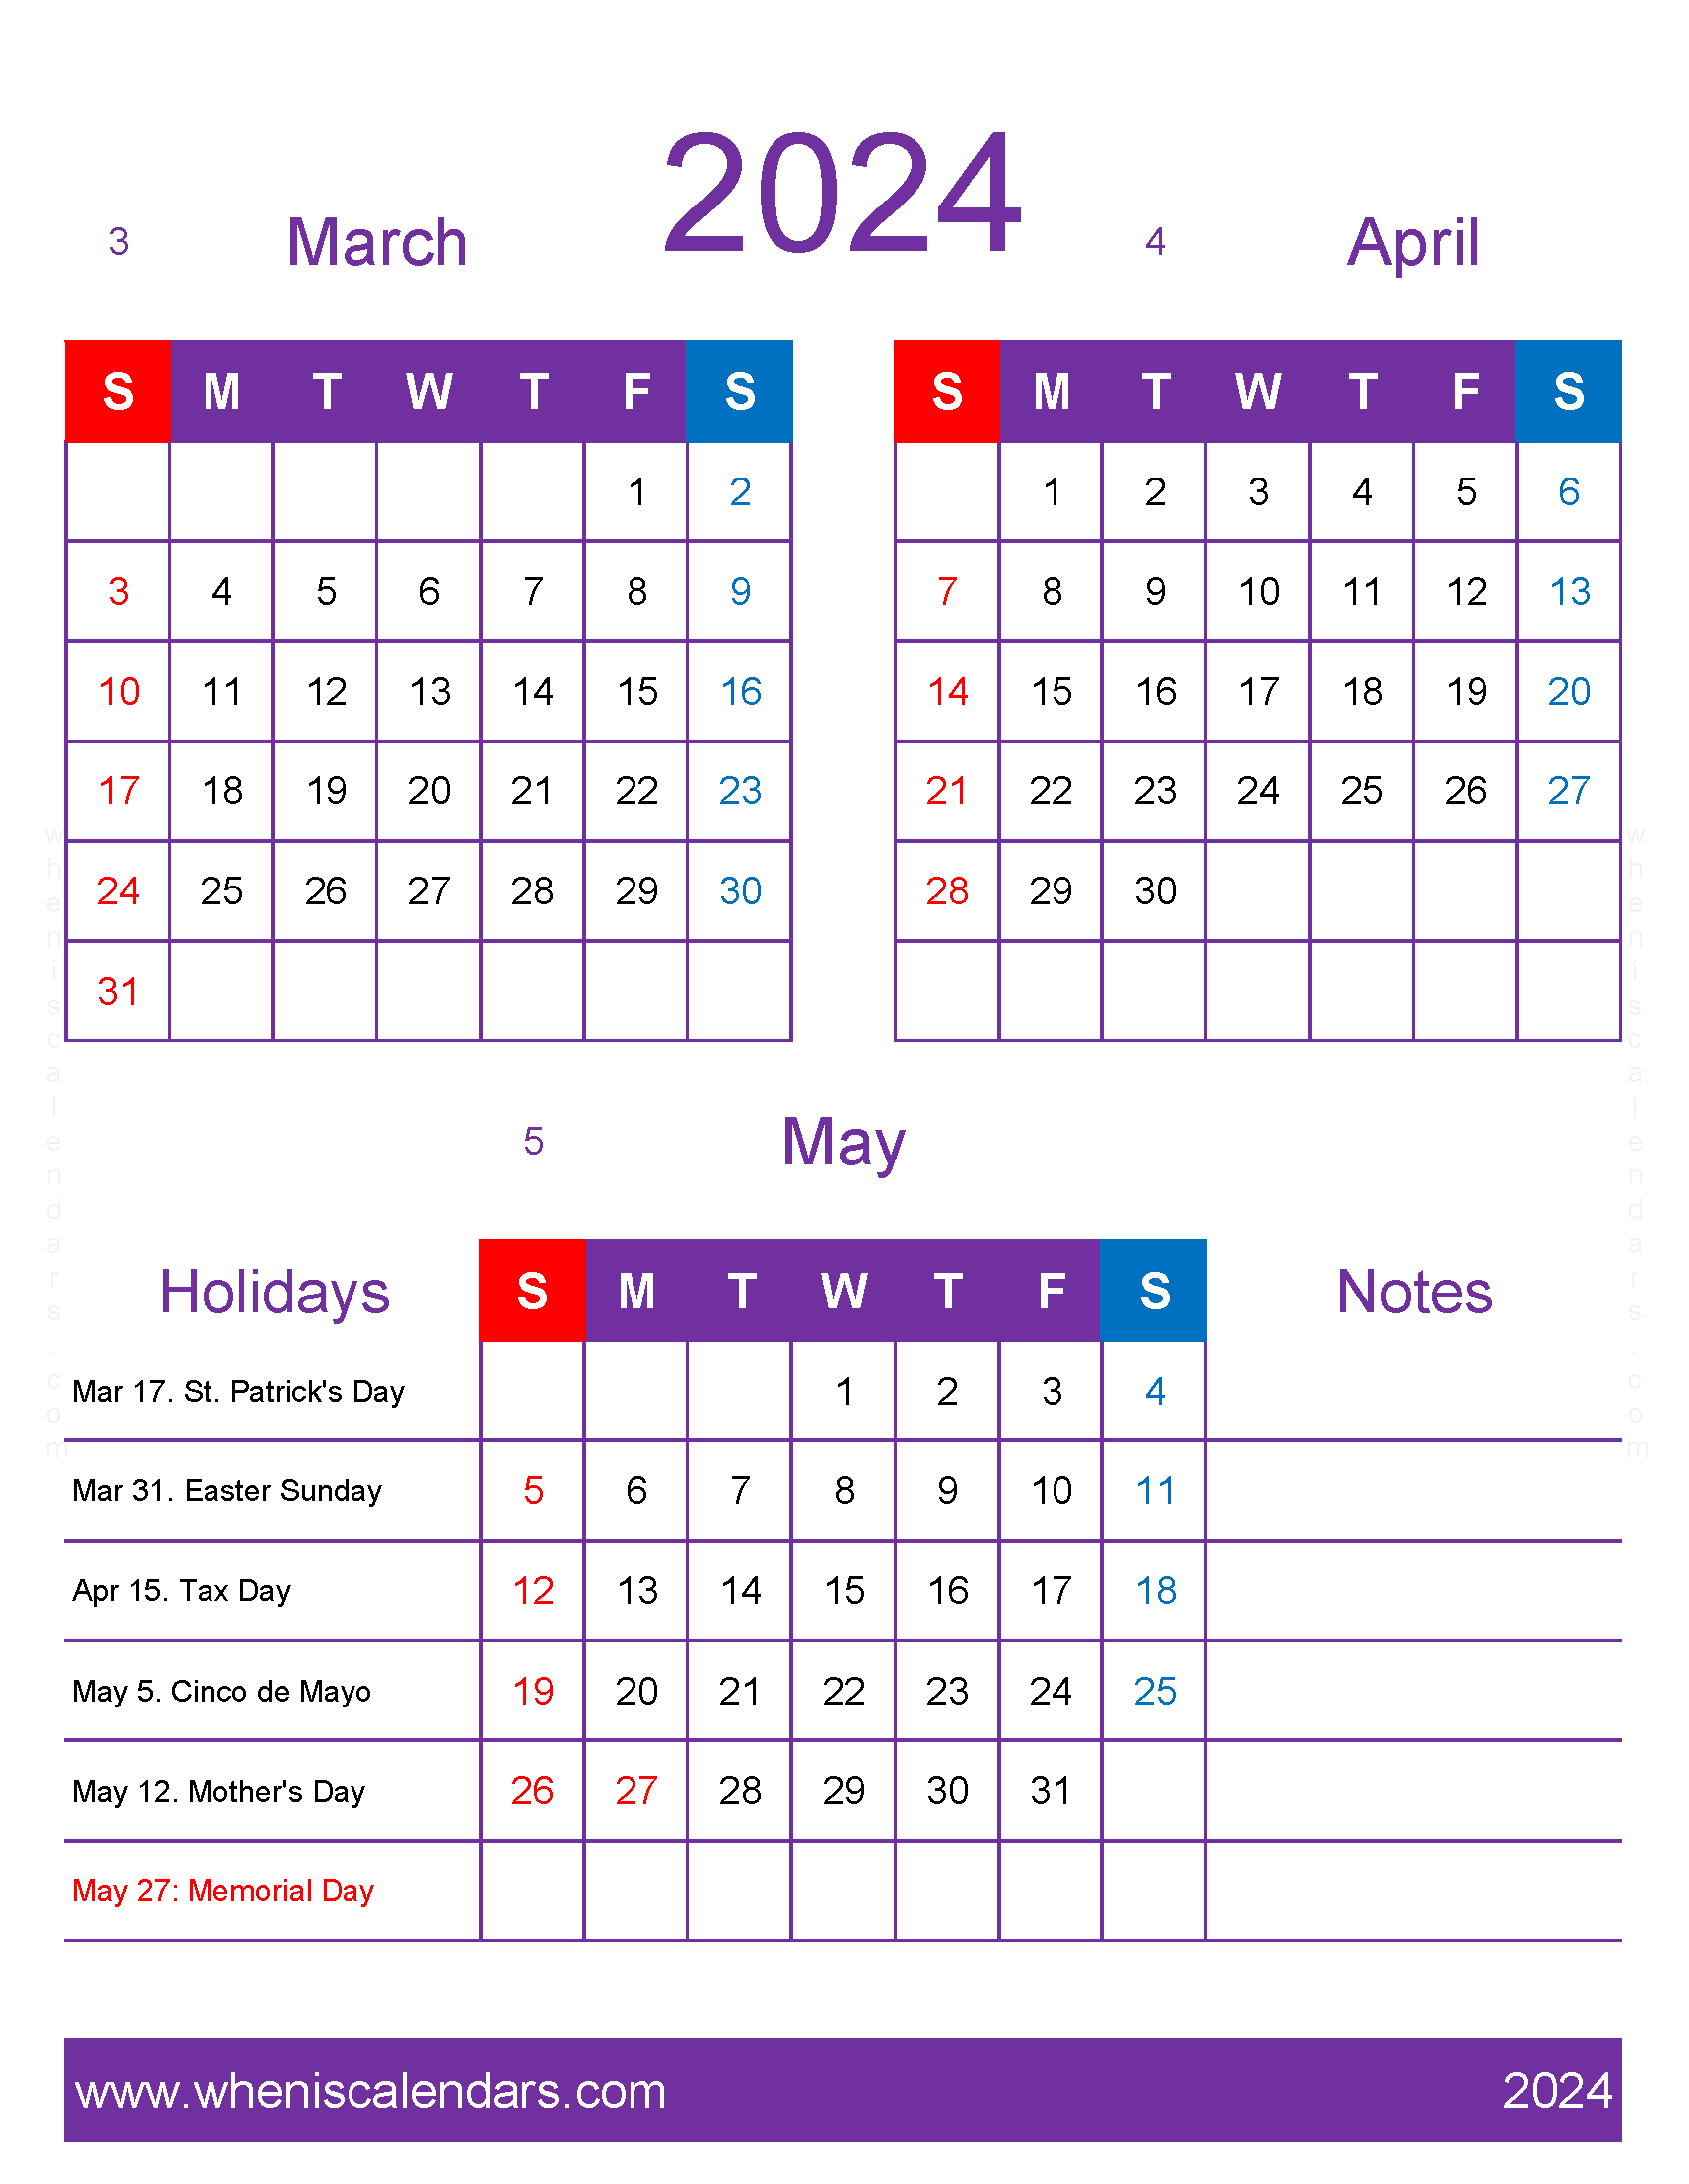 Download calendar Mar Apr May 2024 MAM453